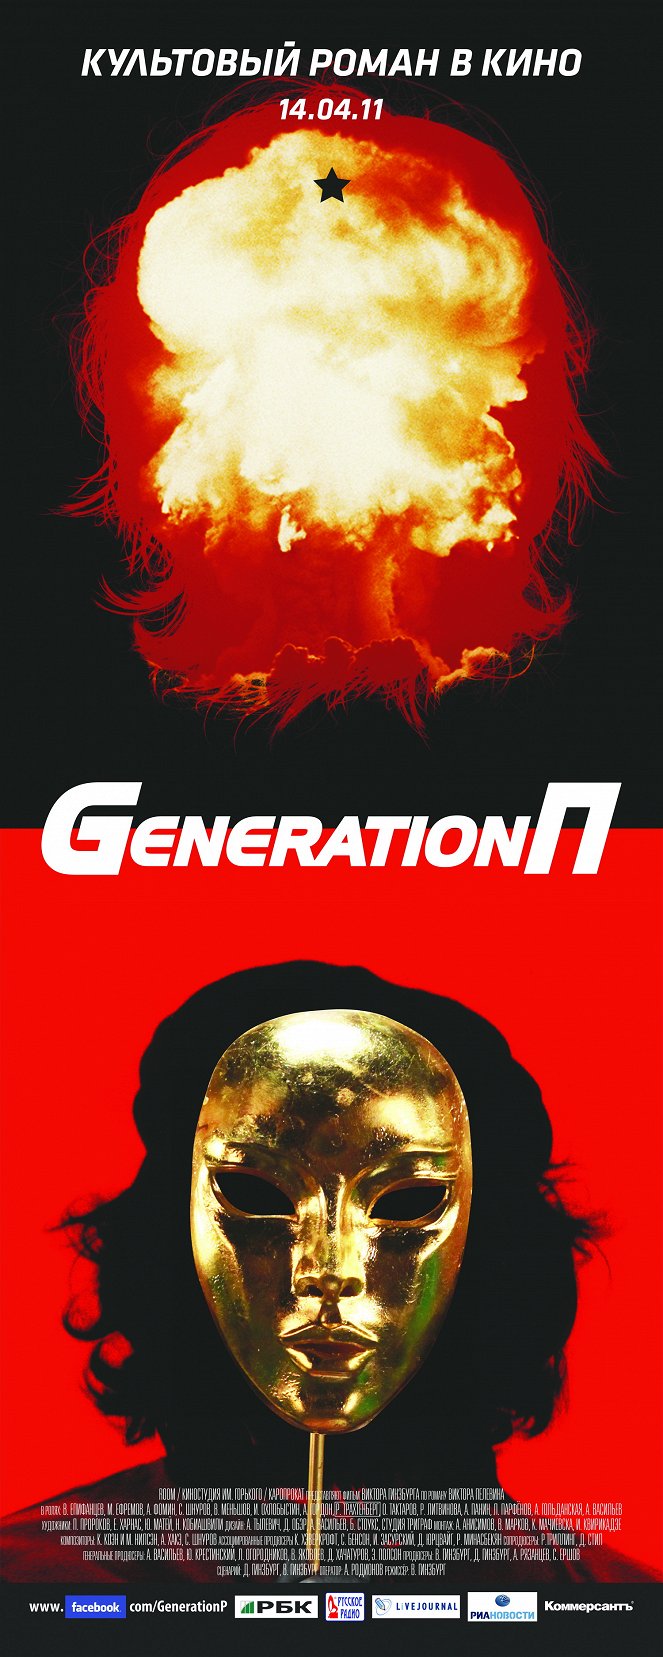 Generation P - Affiches